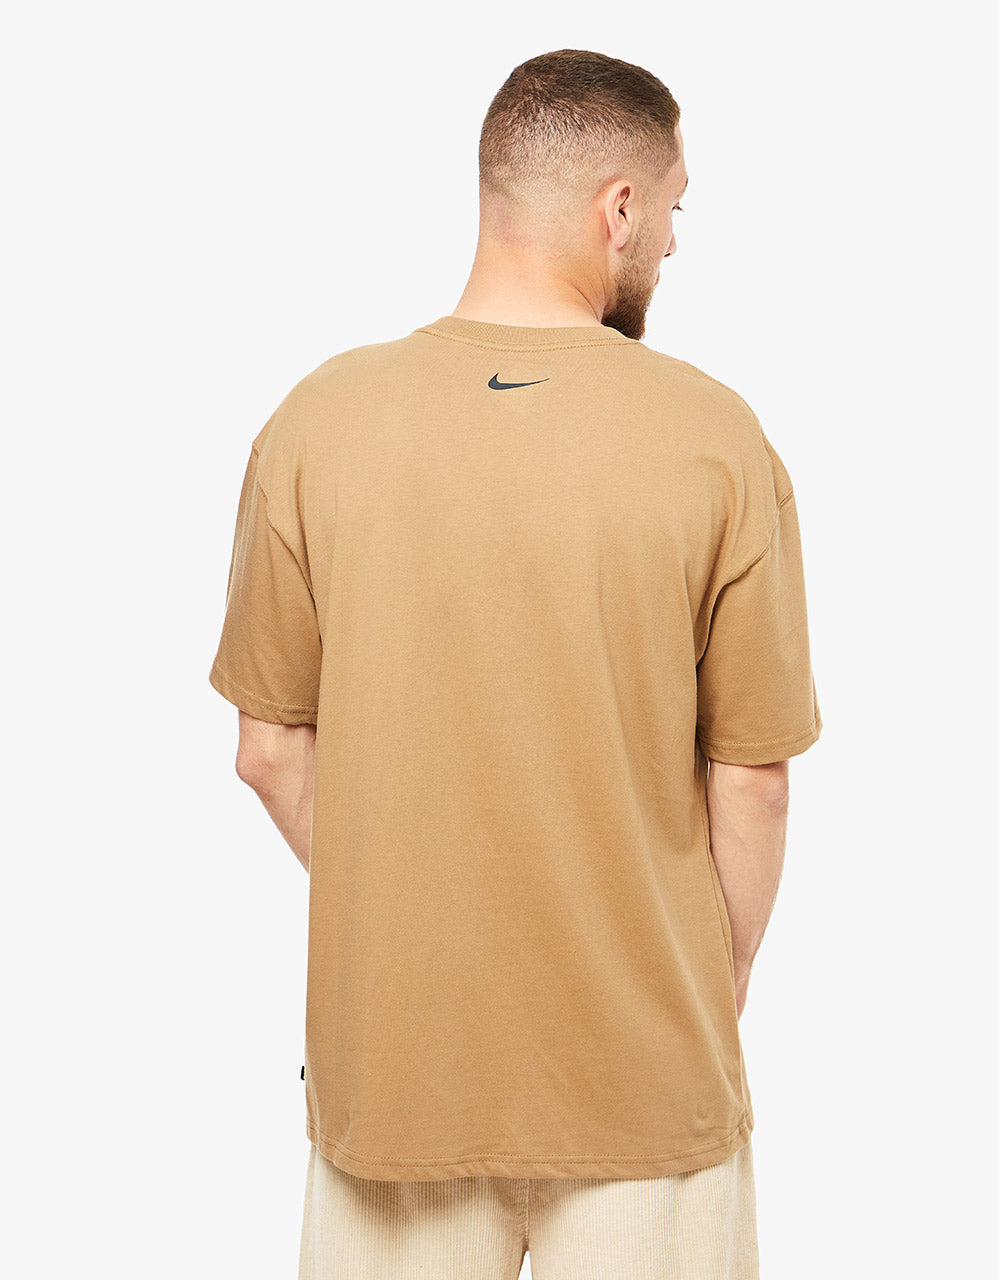 Nike SB Laundry T-Shirt - Dark Driftwood